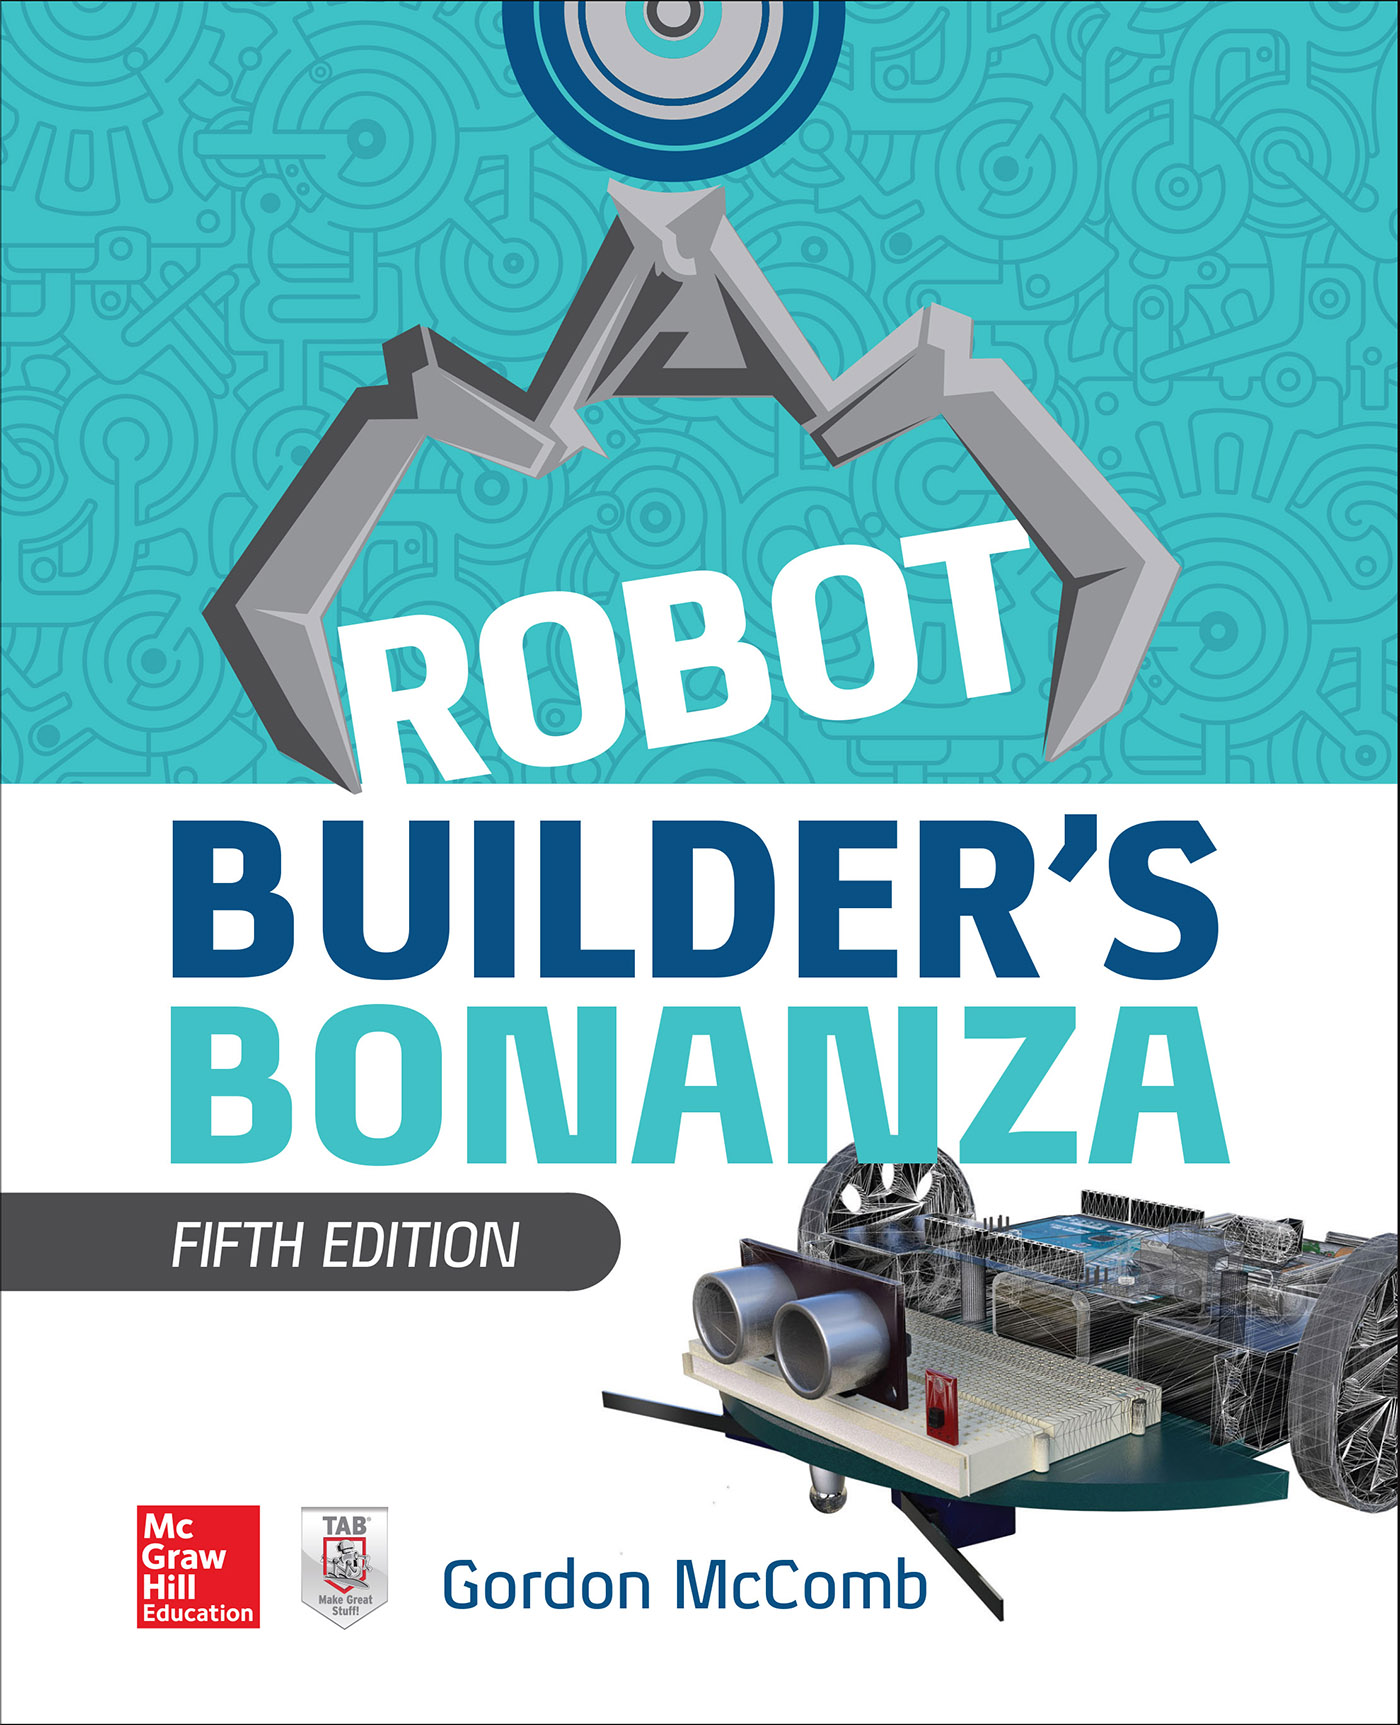 Robot Builder's Bonanza.jpeg